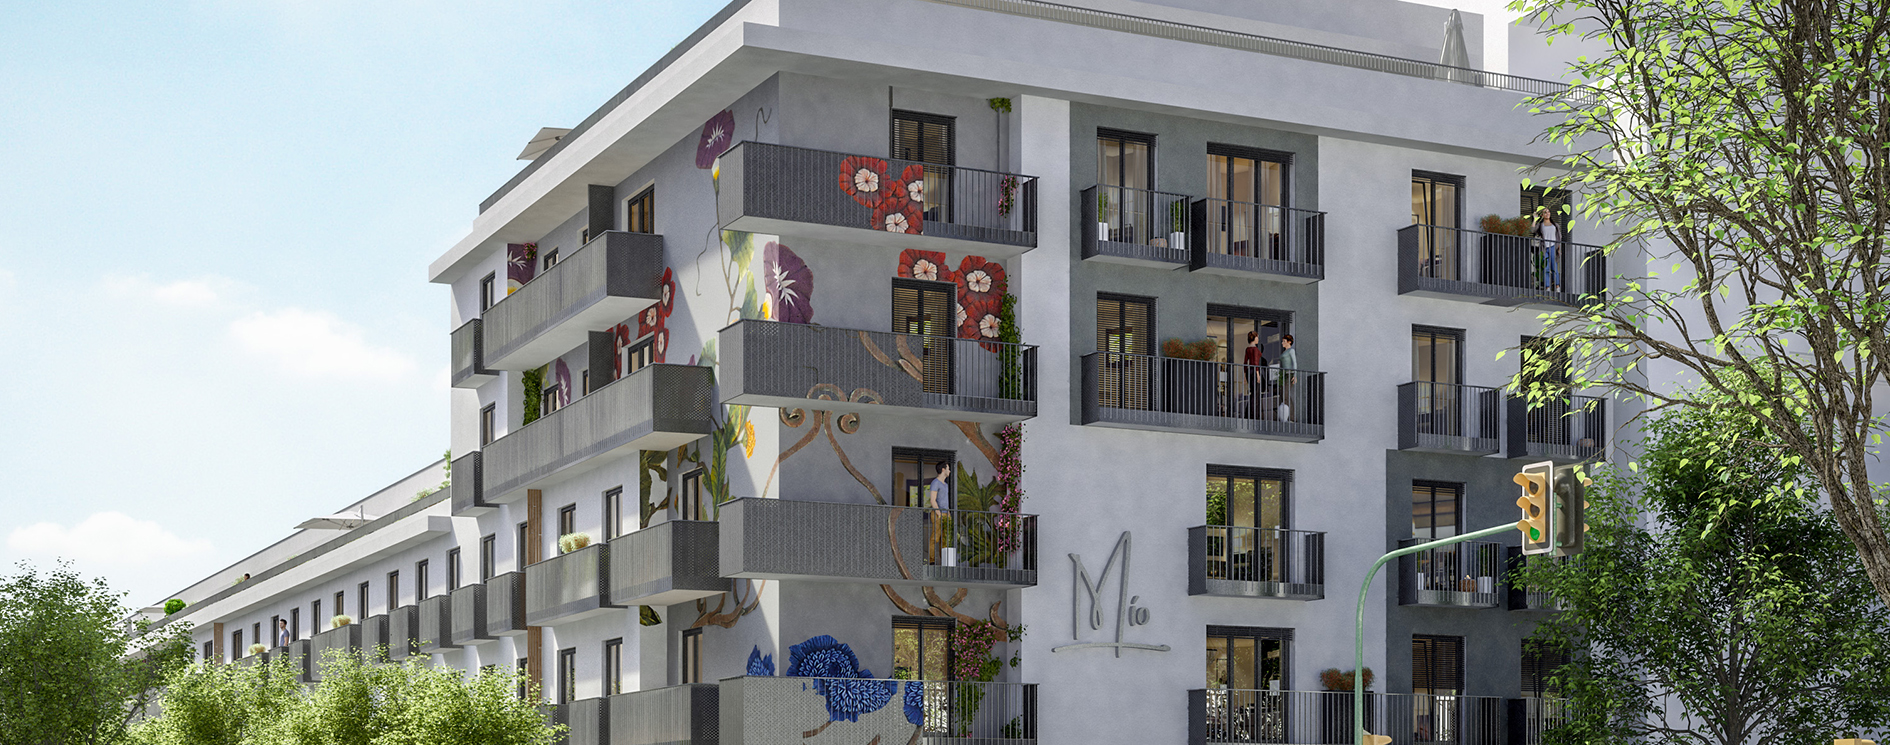 Projekt MÍO in Palma de Mallorca: Behörden erteilen Baugenehmigung für innovatives Wohnkonzept